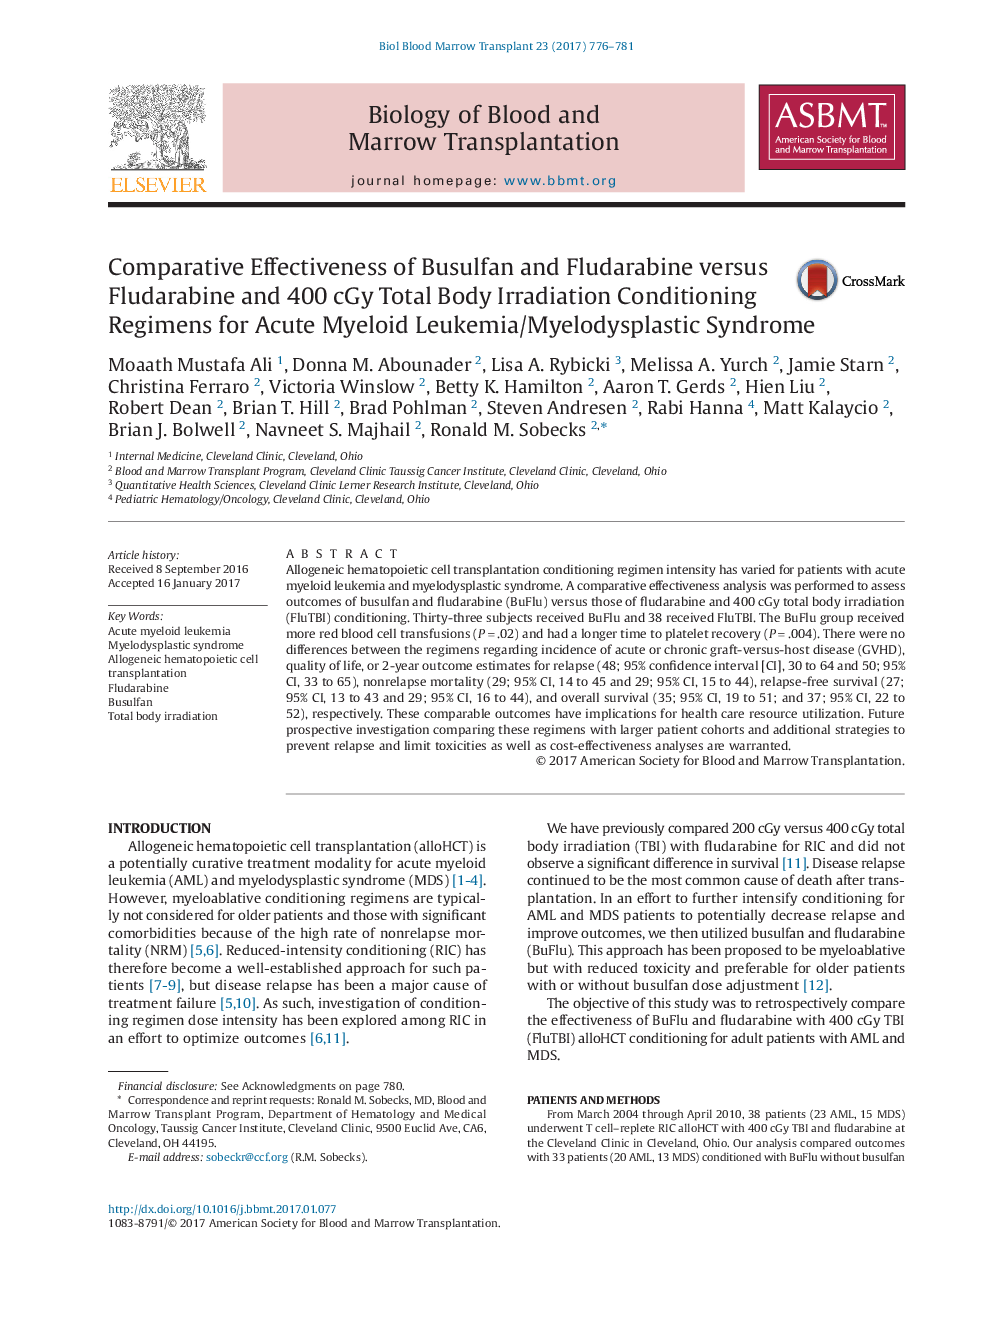 Comparative Effectiveness of Busulfan and Fludarabine versus Fludarabine and 400âcGy Total Body Irradiation Conditioning Regimens for Acute Myeloid Leukemia/Myelodysplastic Syndrome